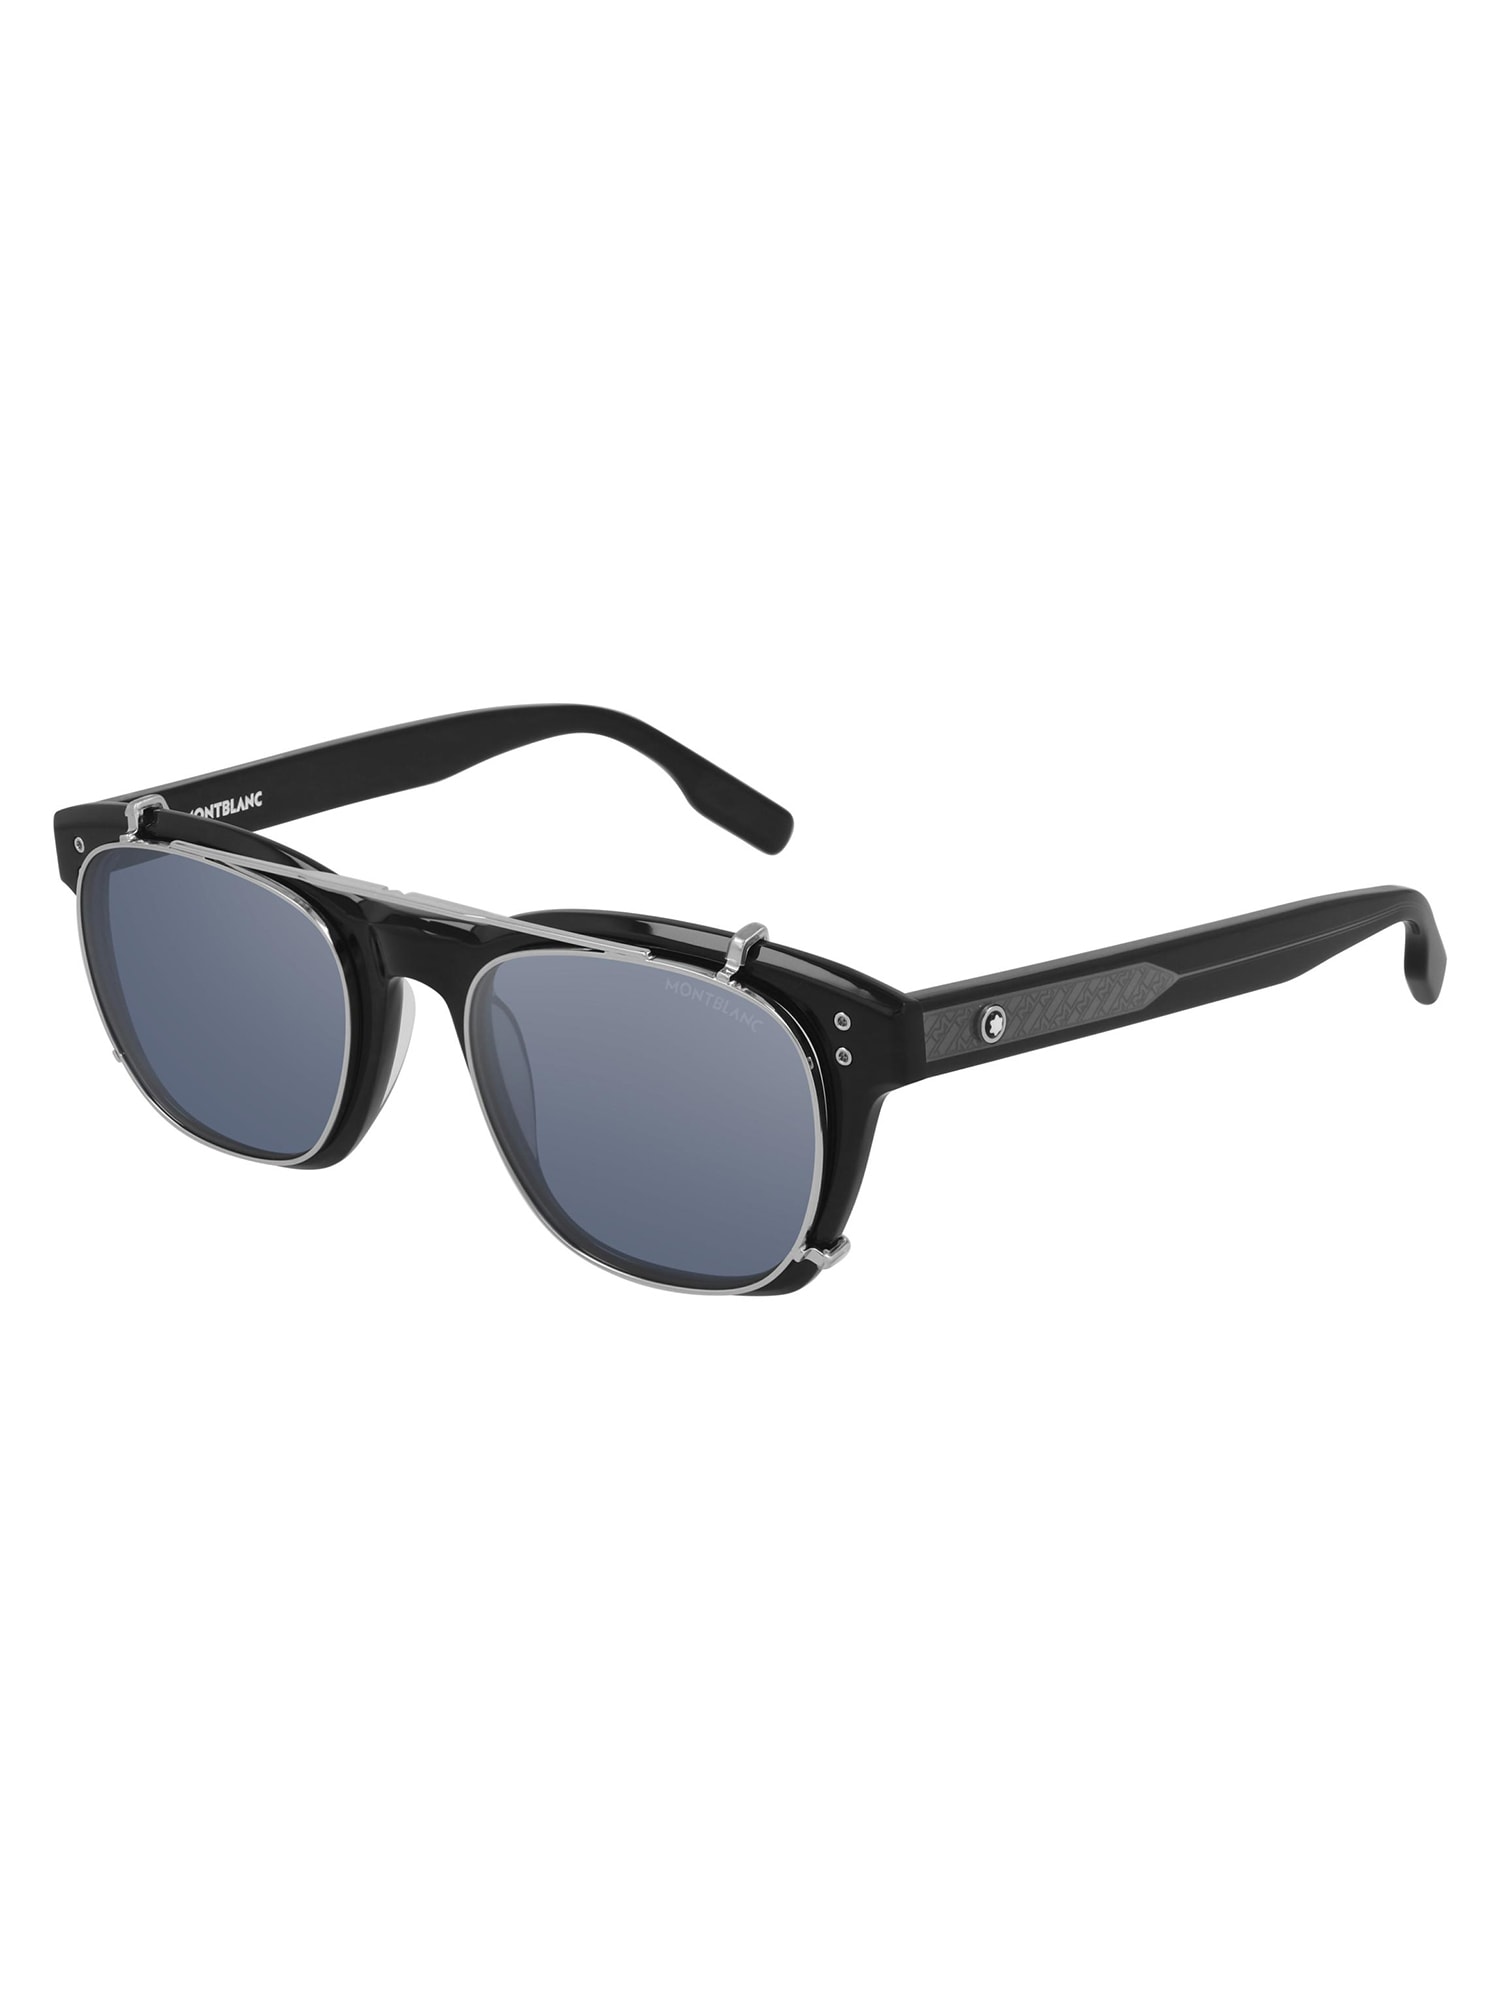 Montblanc Mb0122s Sunglasses In Black Black Blue